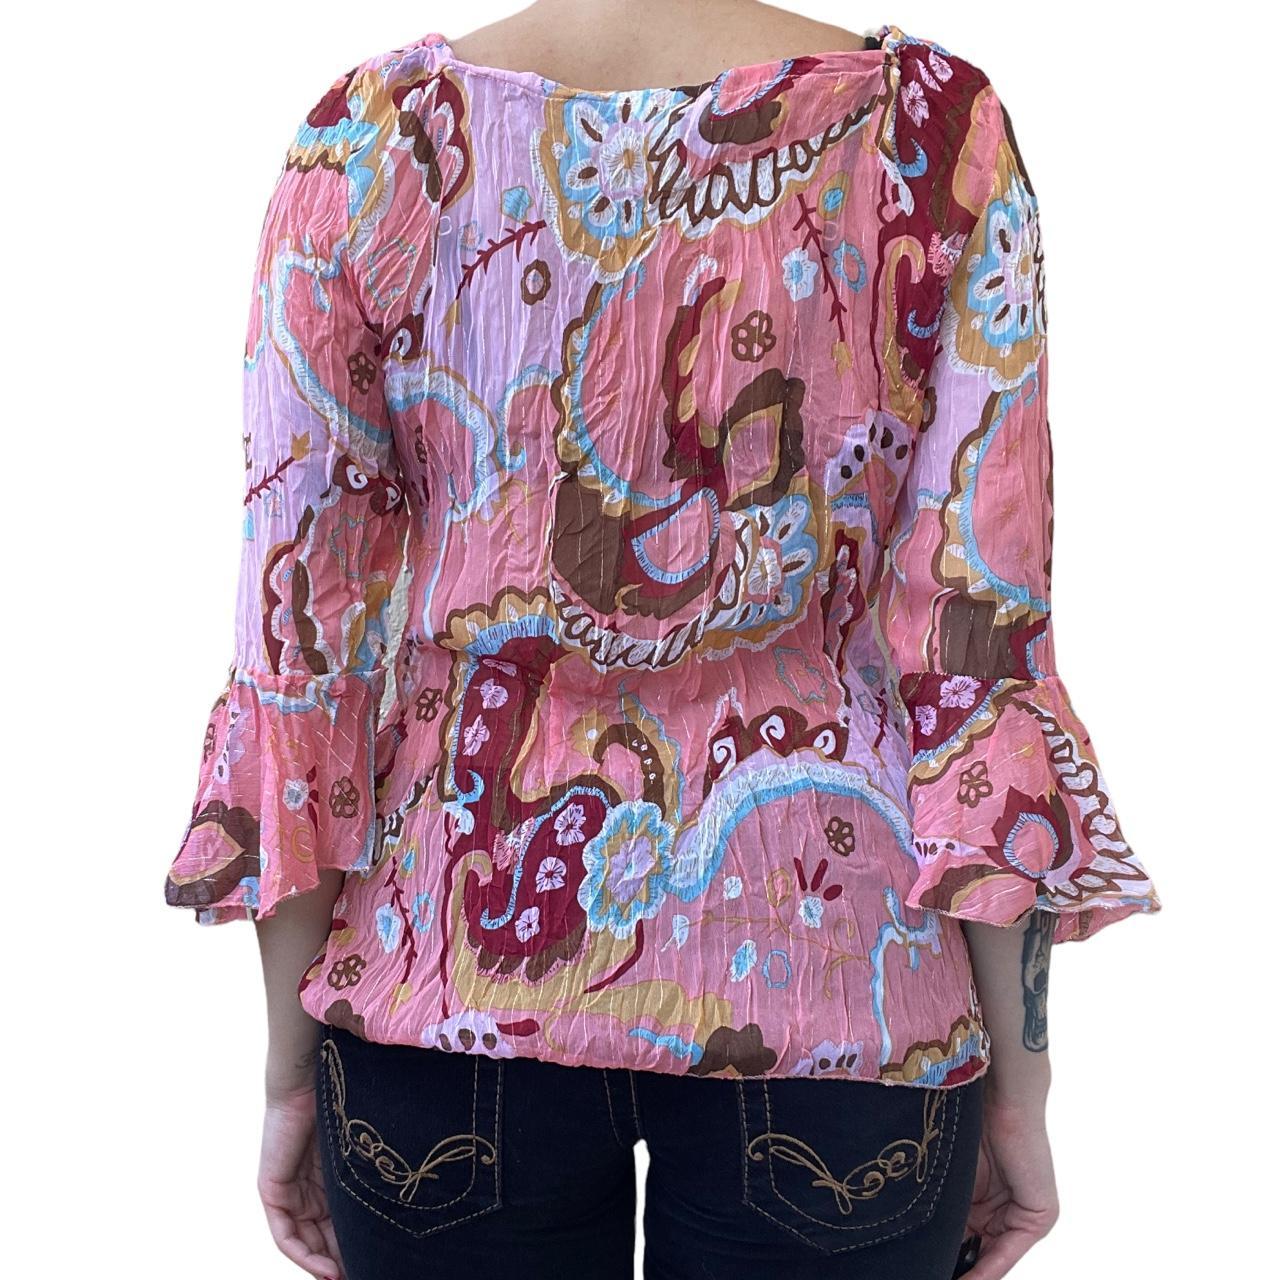 Y2k boho blouse in pink with falsely floral print 💕... - Depop